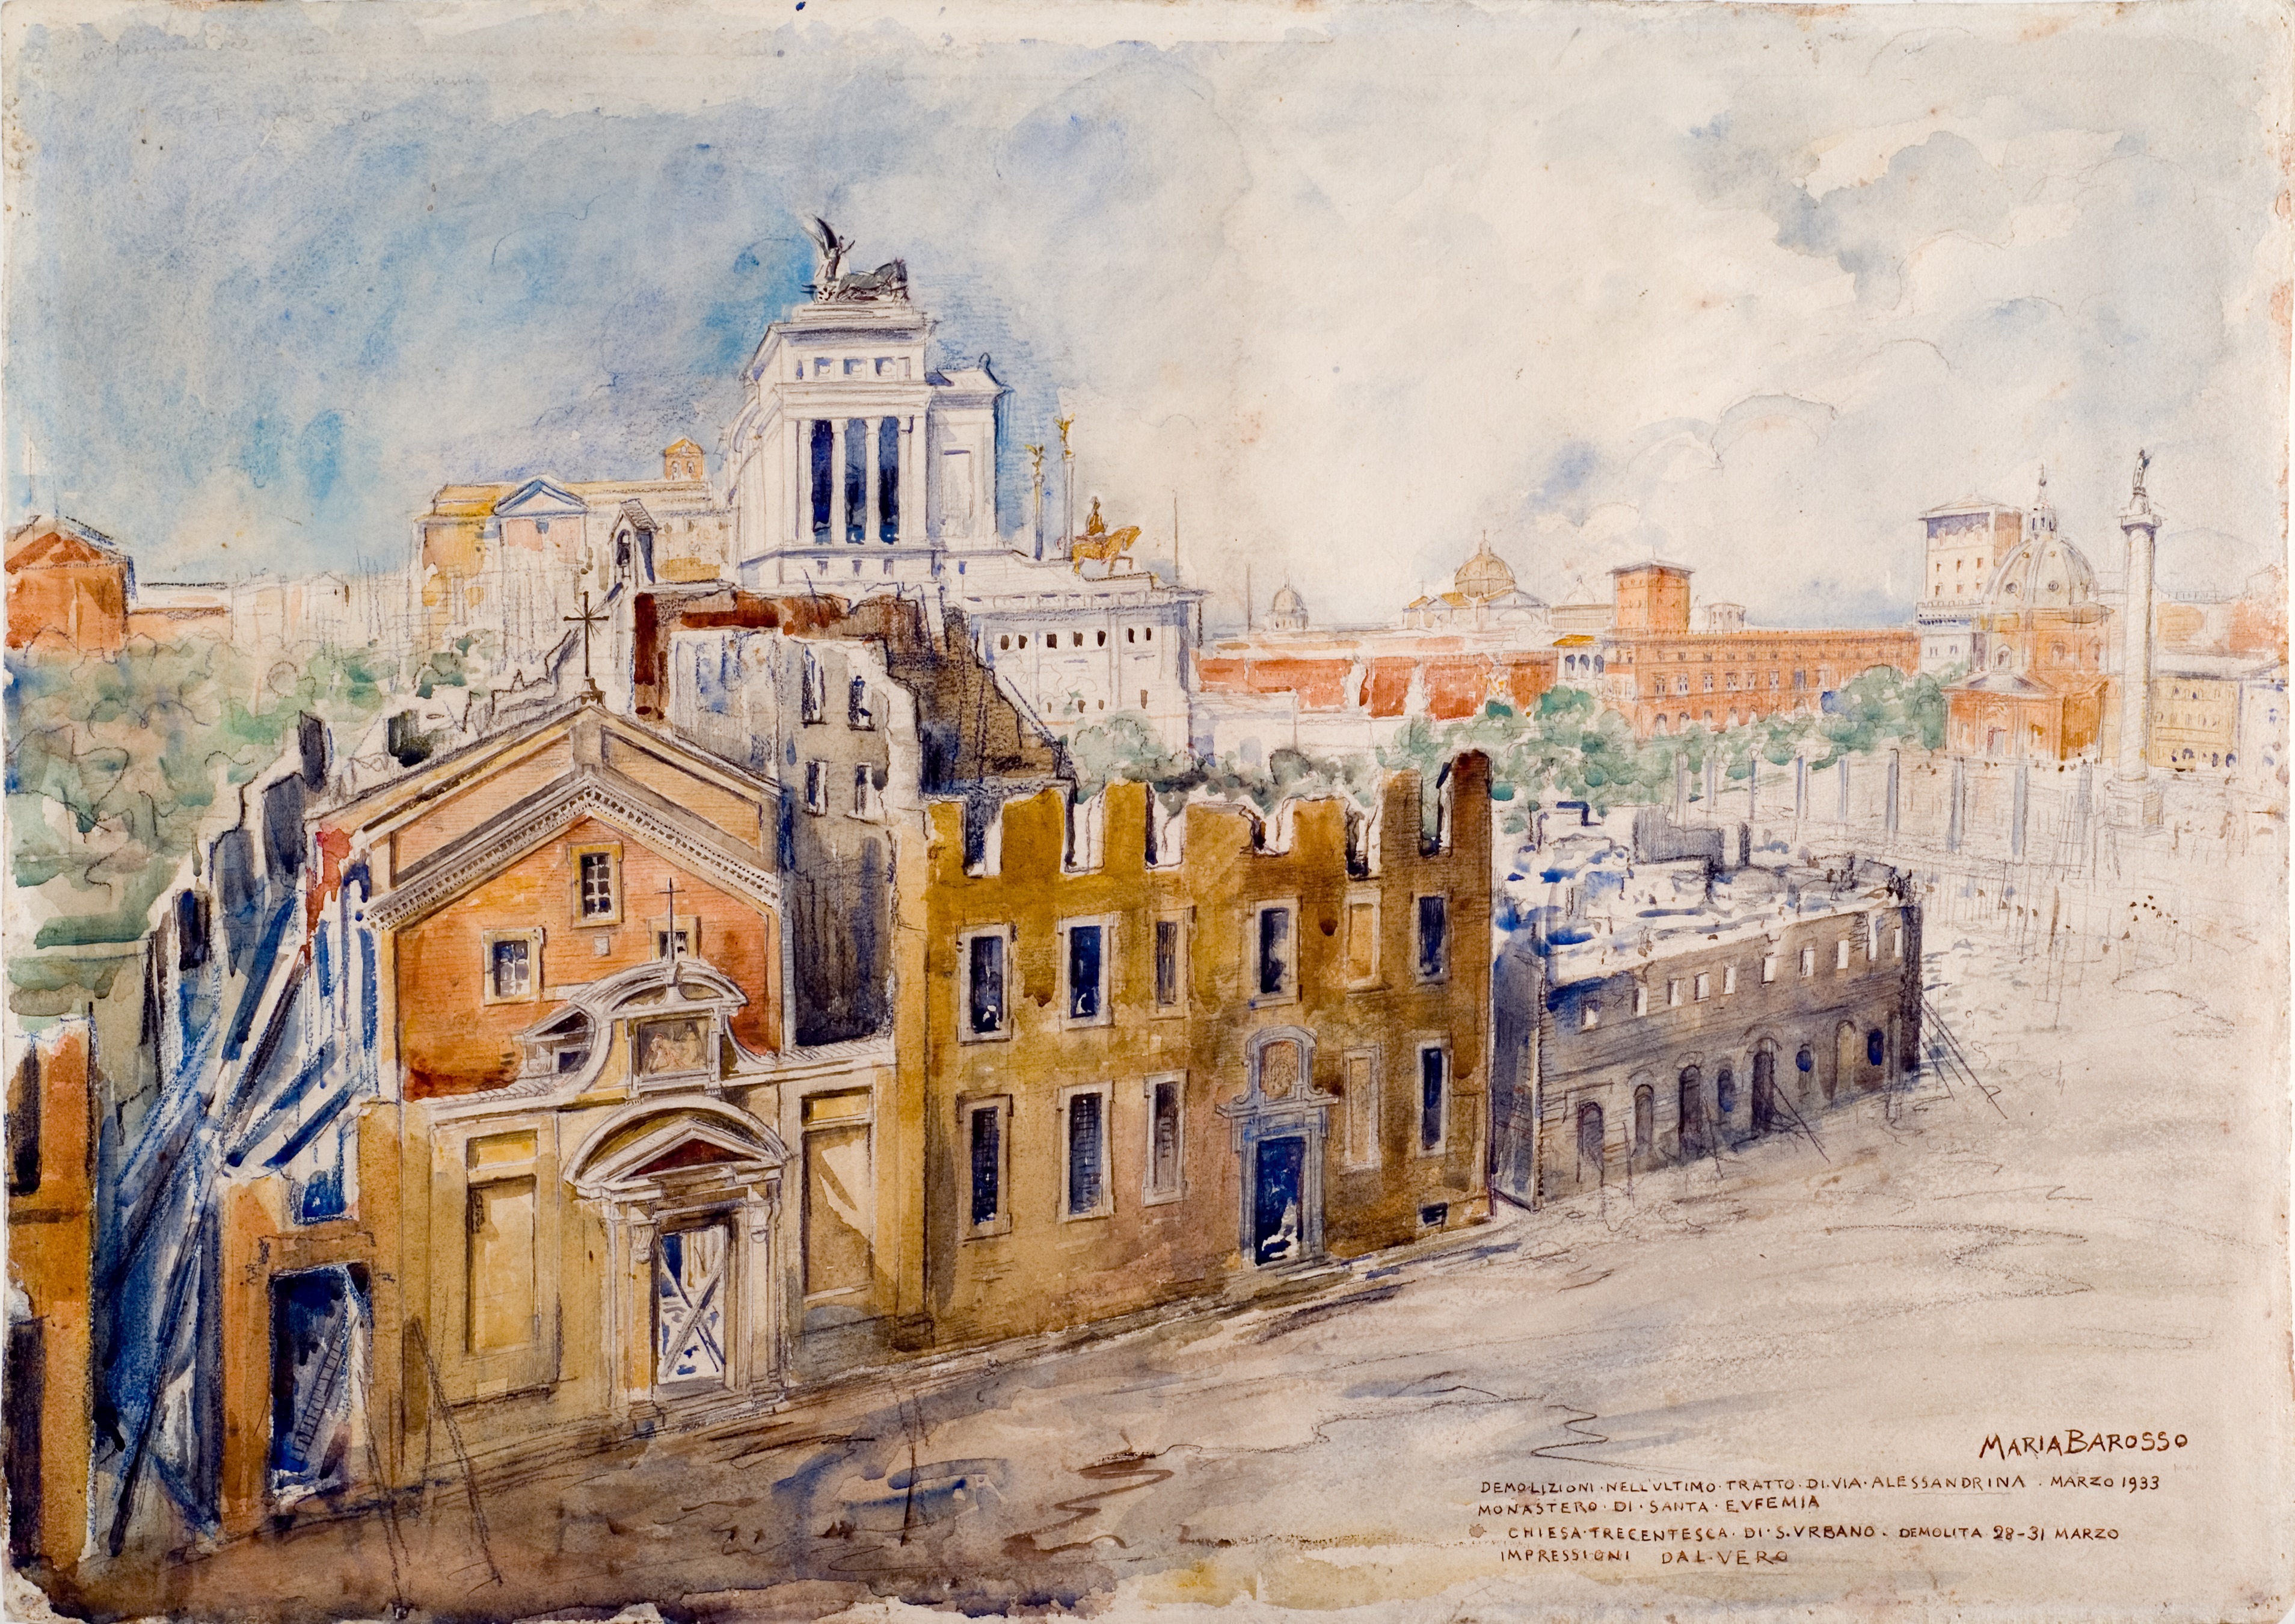 Maria Barosso, Demolitions of the Monastery and Church of Saint Urbano - 1933 (Museo di Roma)